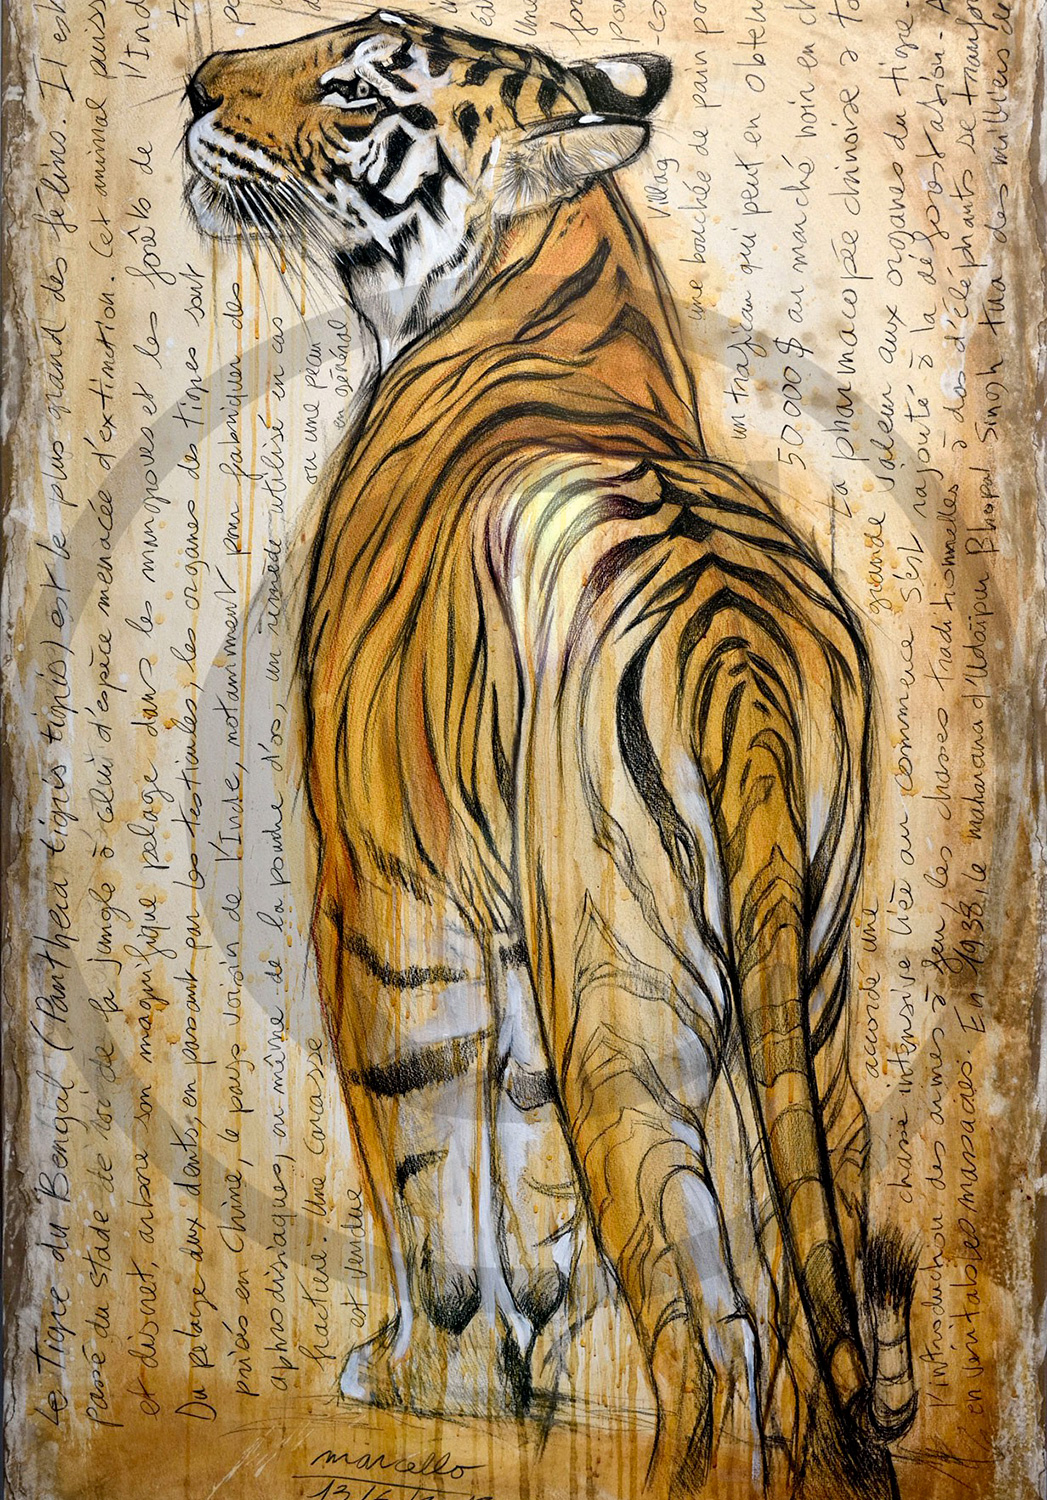 Marcello-art : Faune africaine 298 - Tigre du Bengale